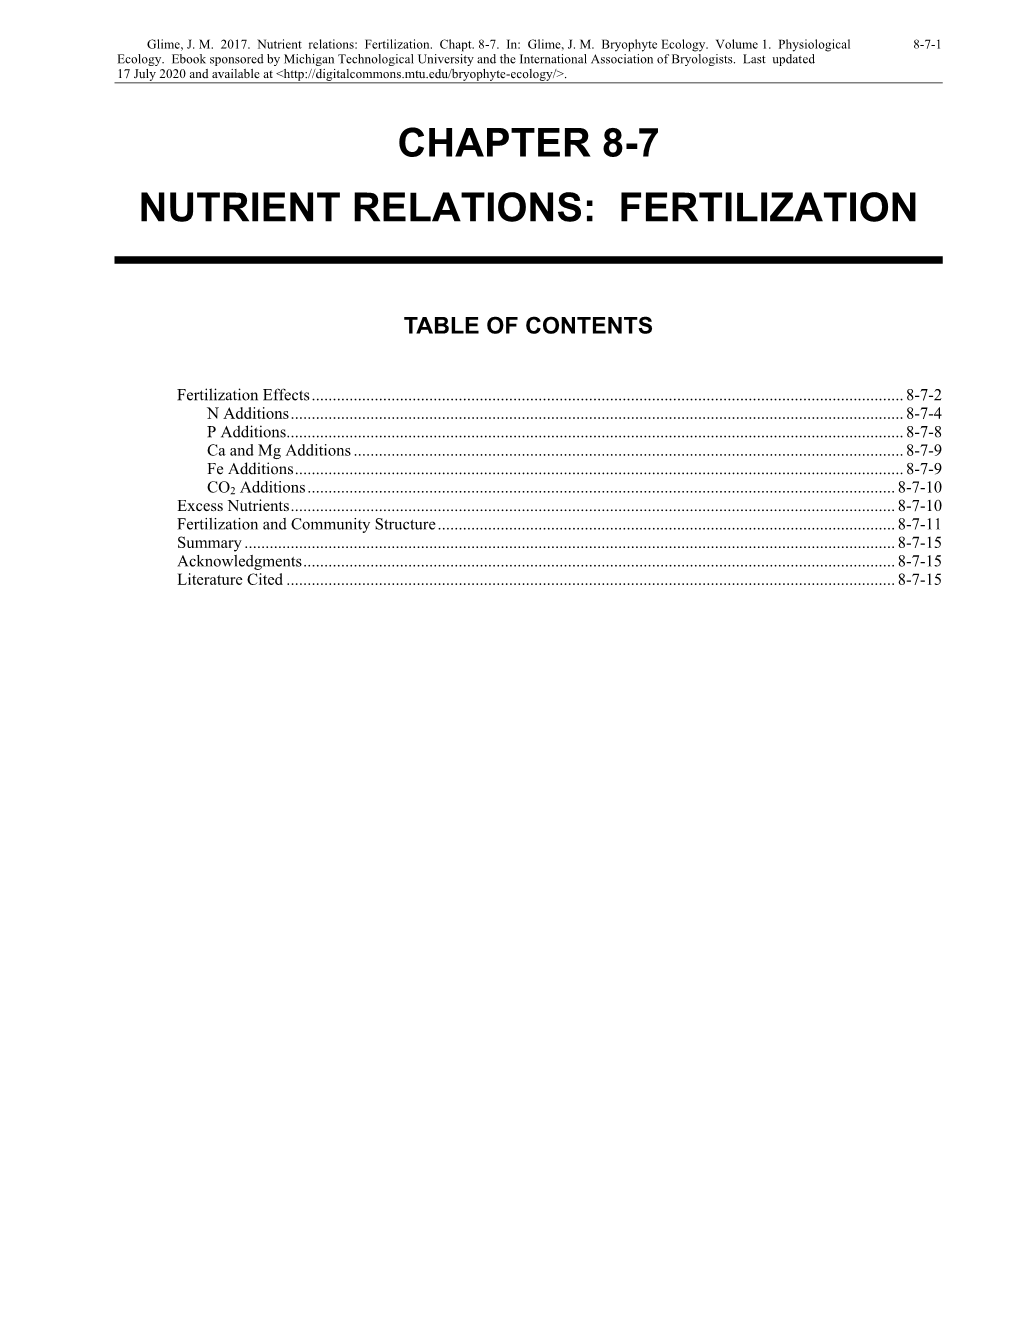 Nutrient Relations: Fertilization